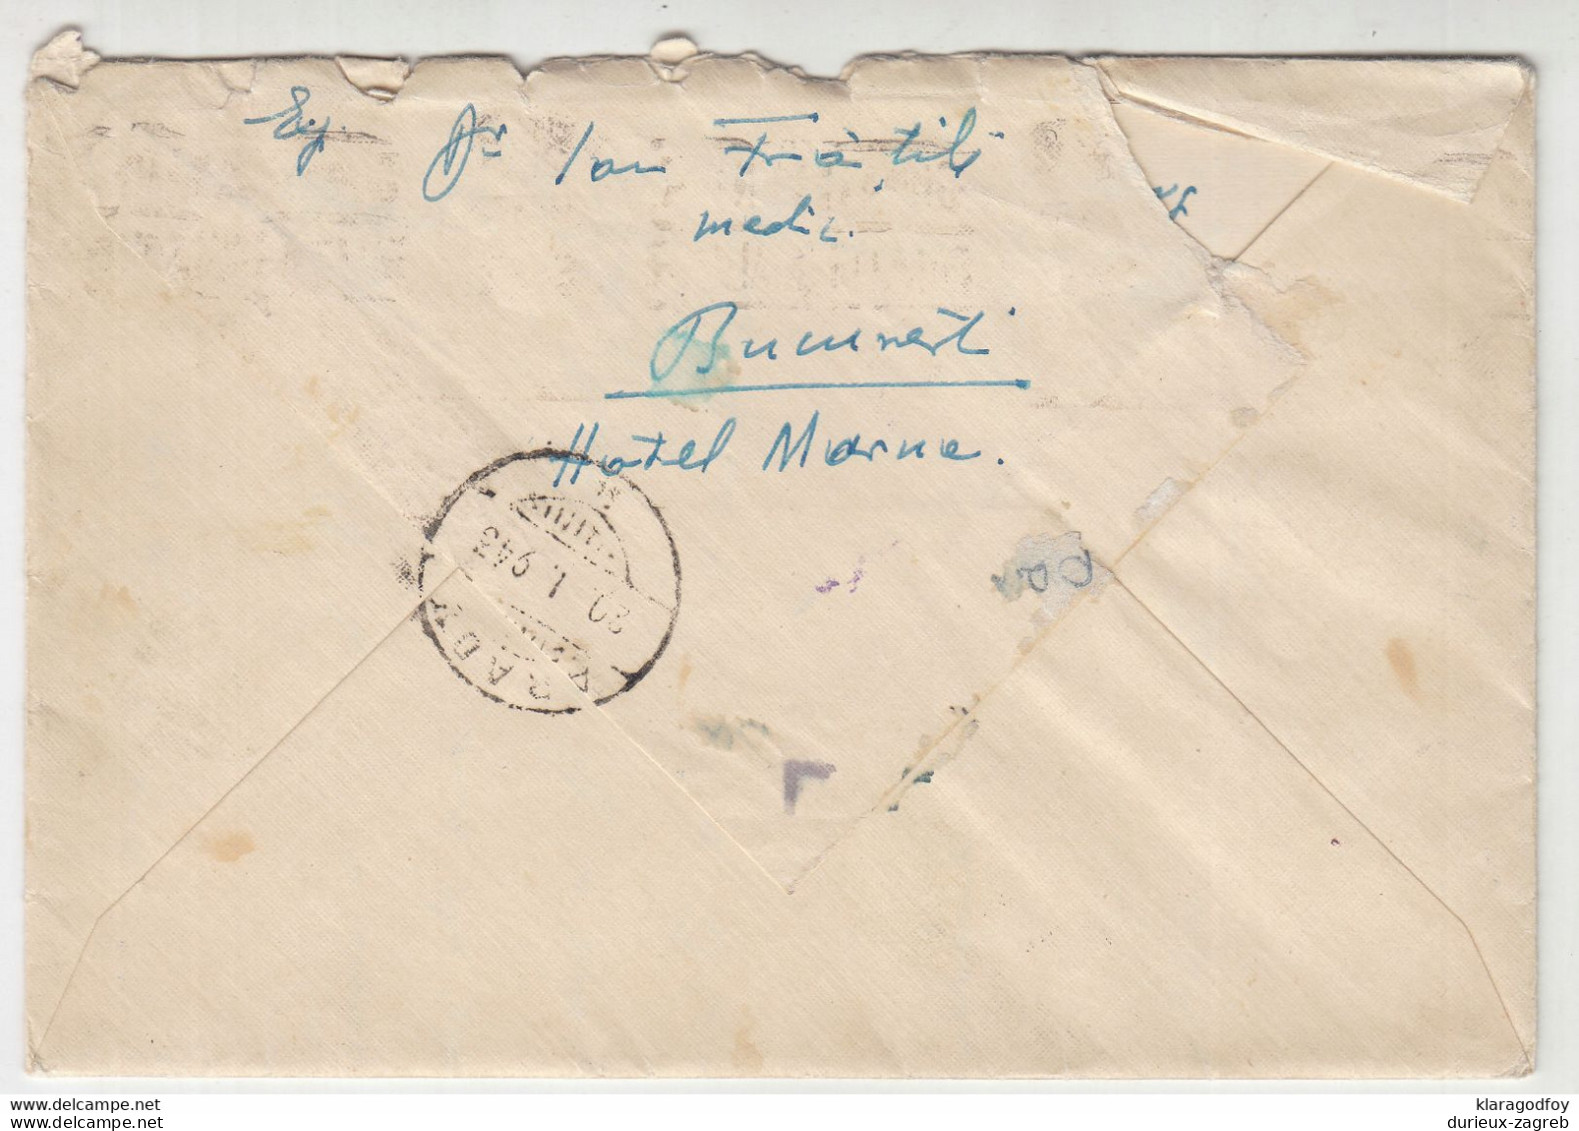 Romania WWII Bucuresti Censored Letter Posted 1943 Bucuresti To Arad B210310 - World War 2 Letters